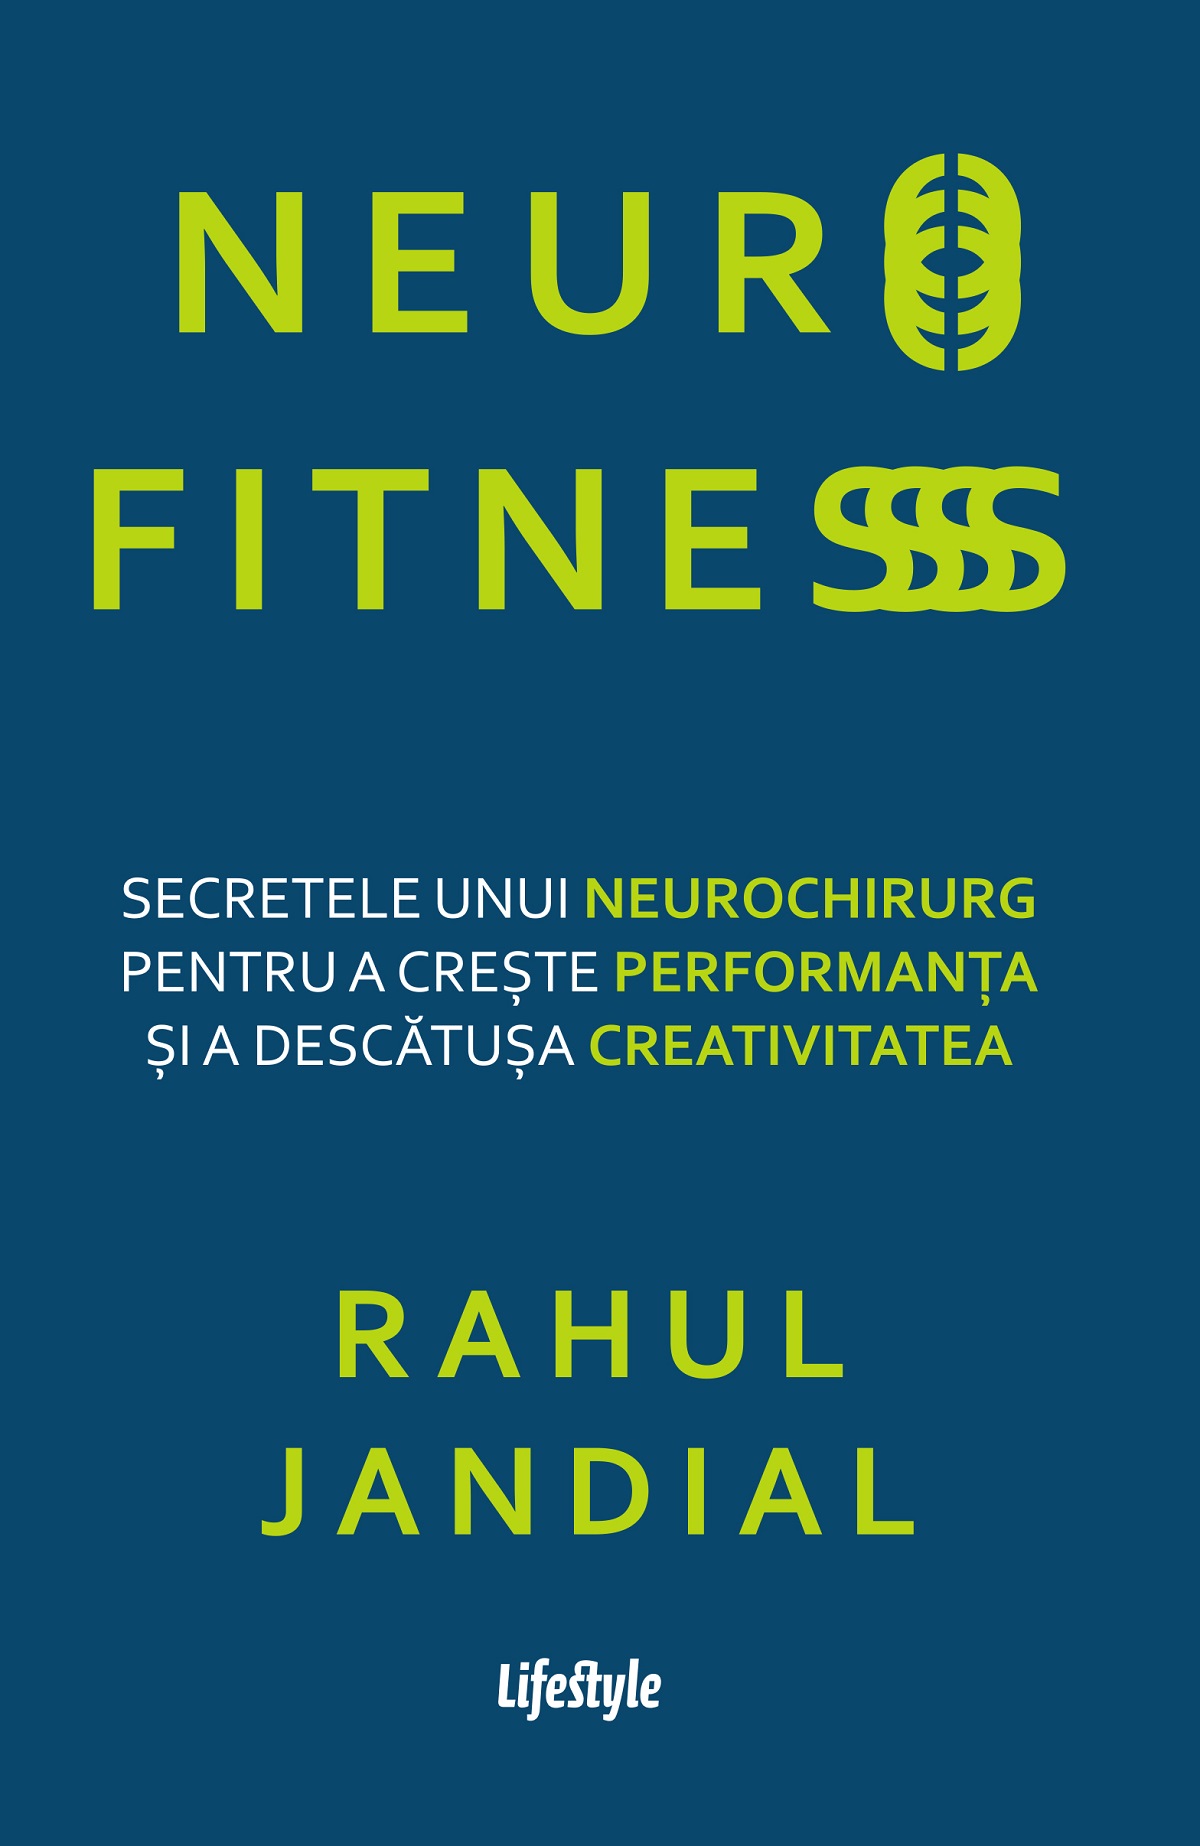 Neurofitness - Rahul Jandial